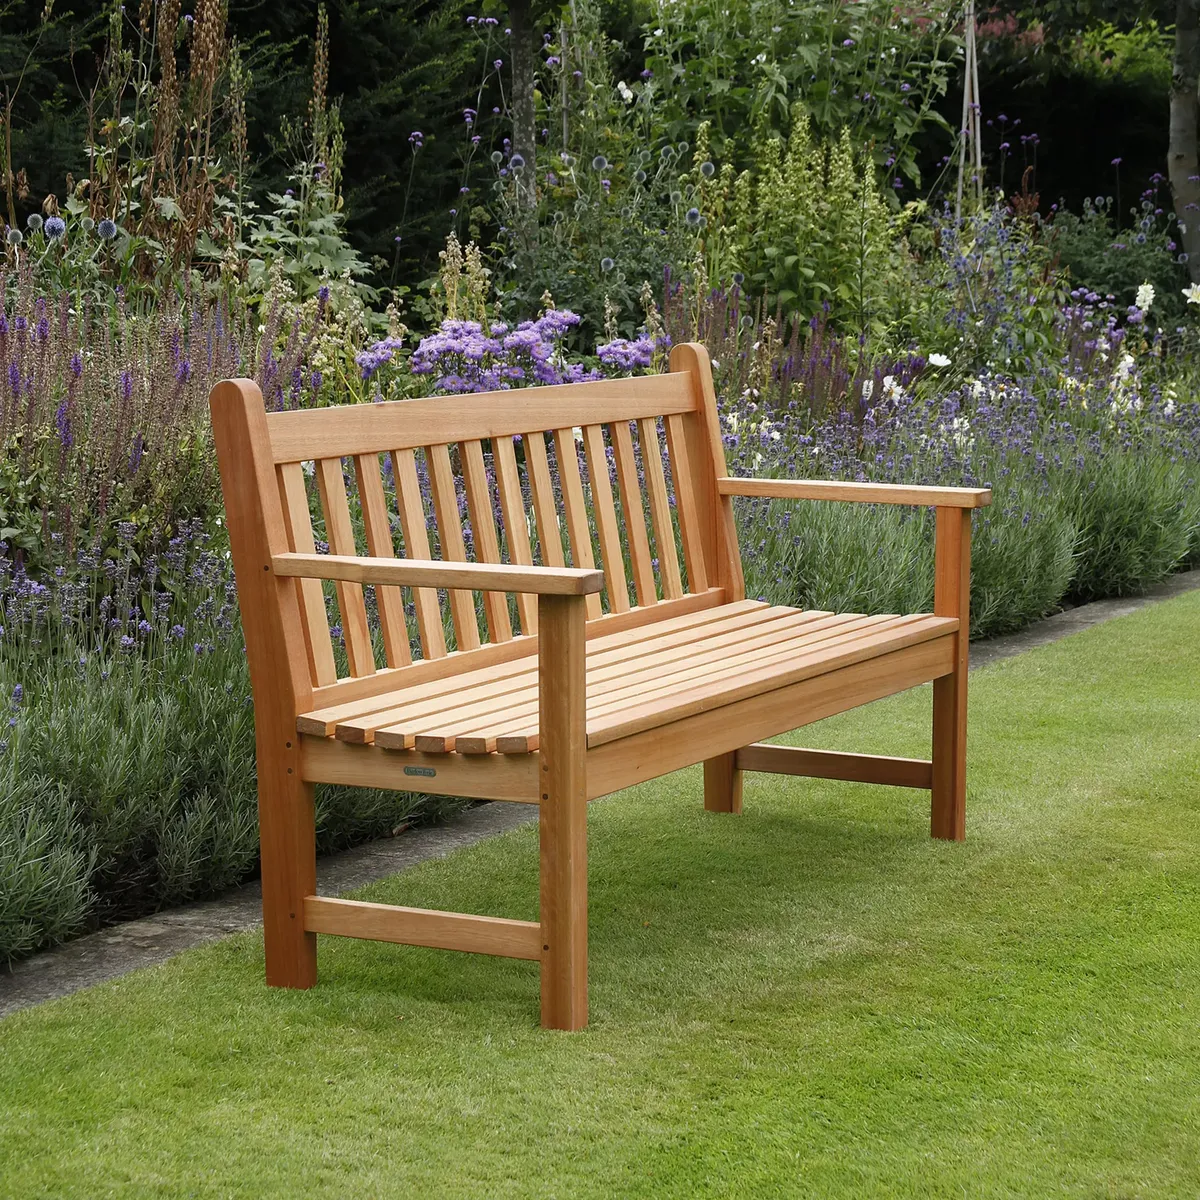 Wooden garden benches